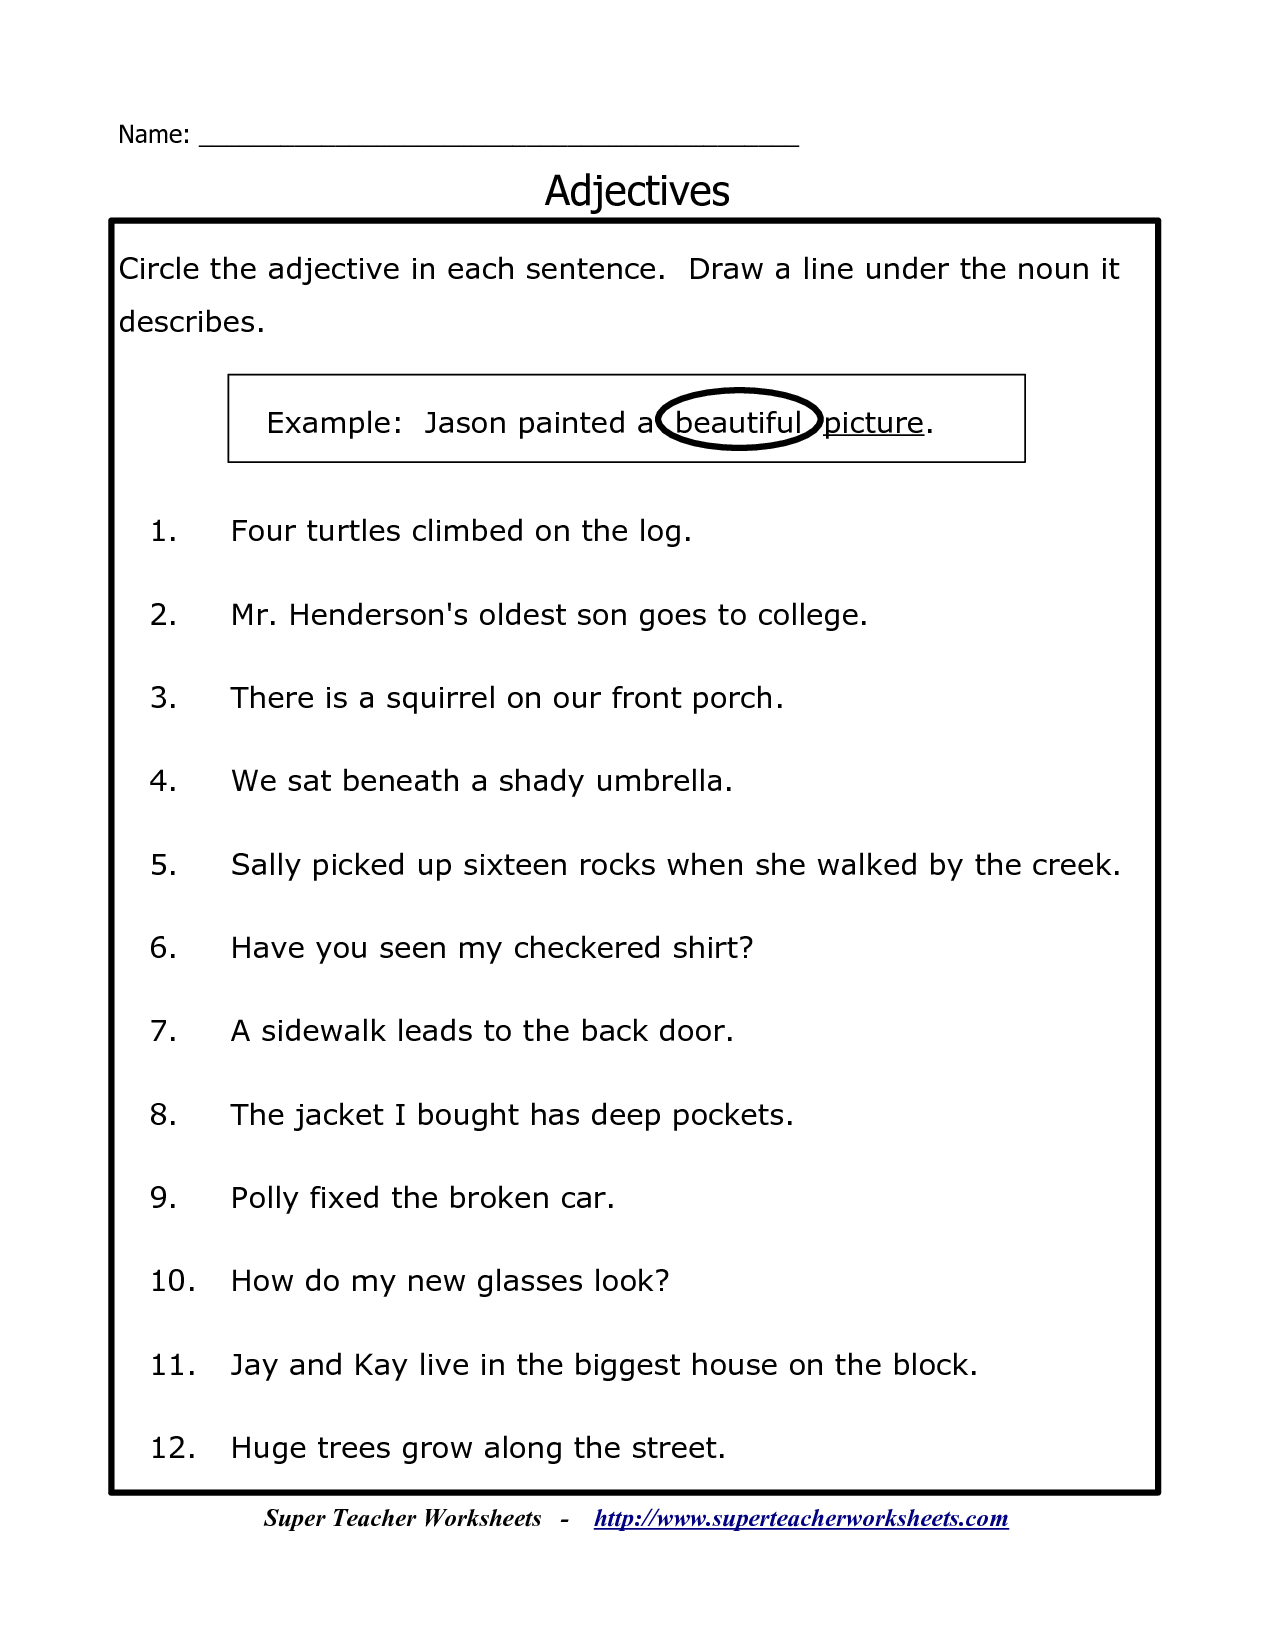 grammar-worksheet-packet-nouns-adjectives-and-verbs-worksheets-2ca